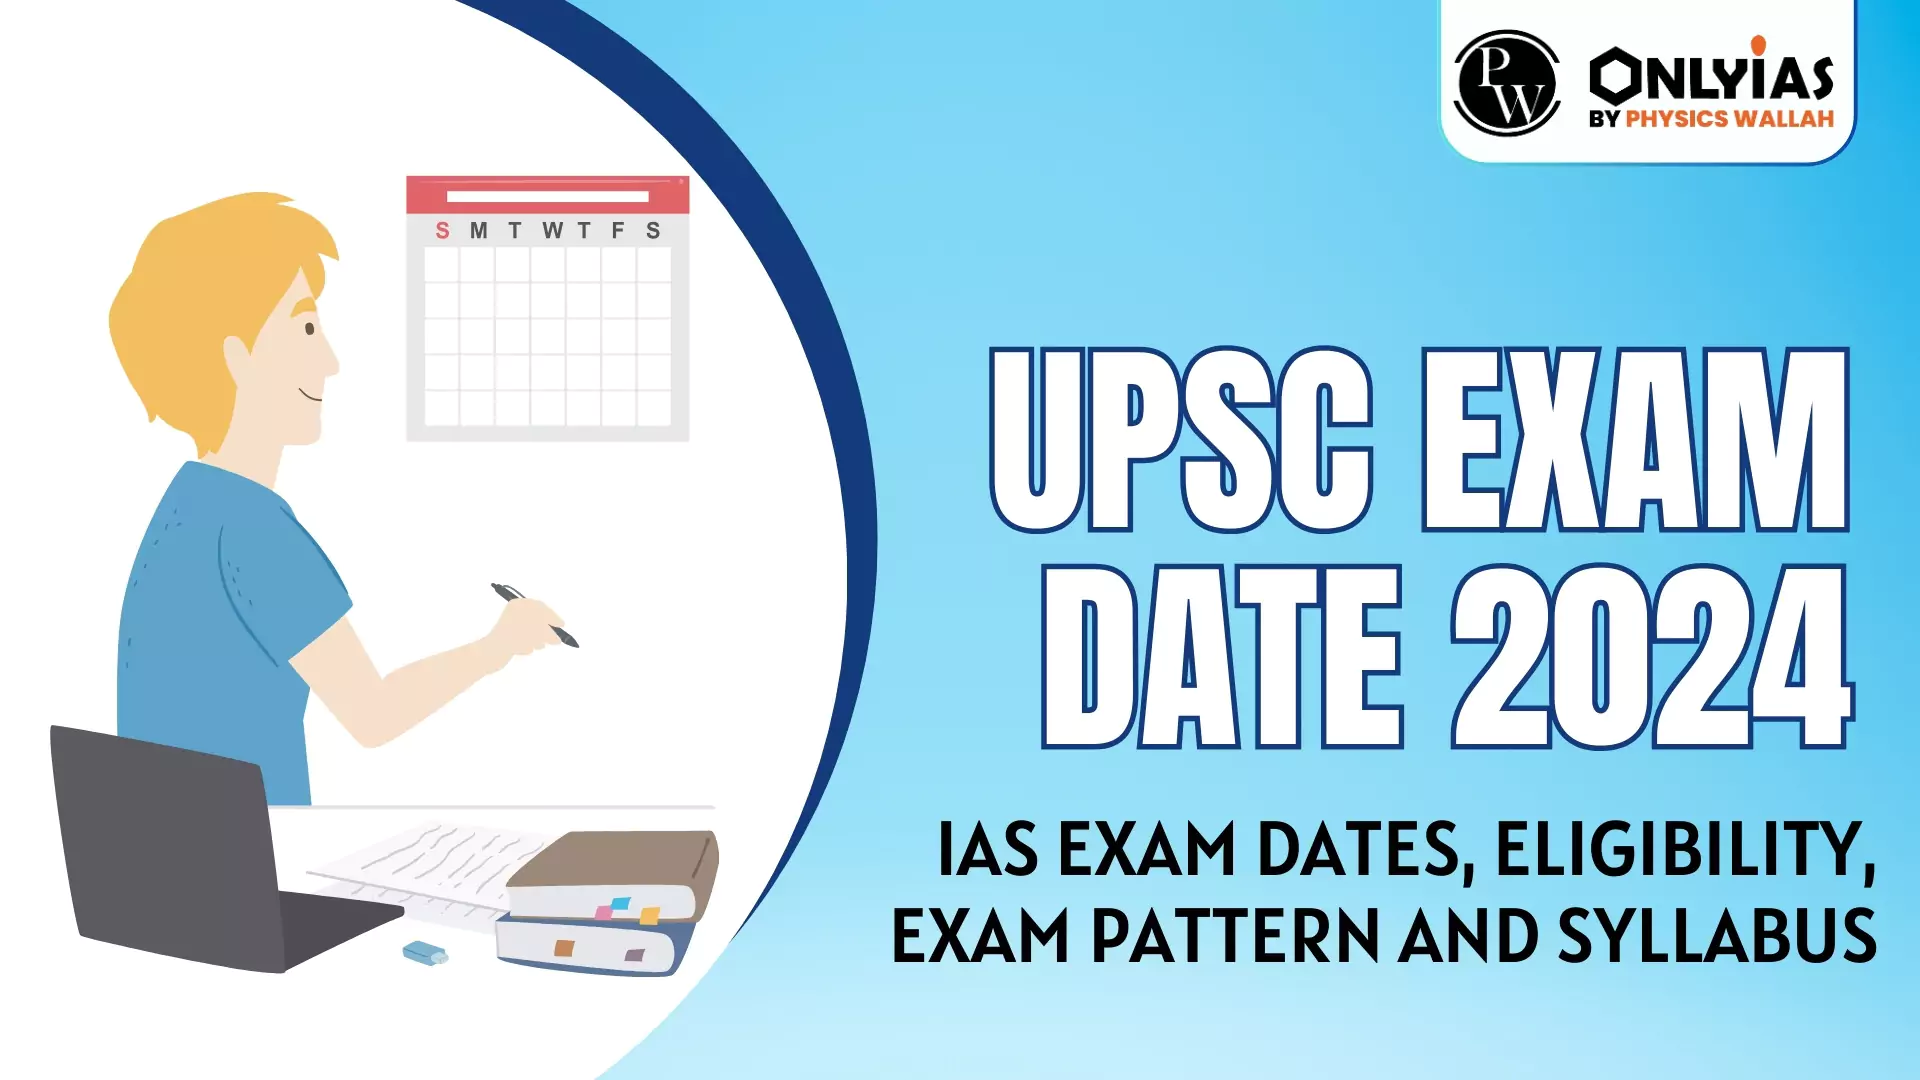 UPSC Exam Date 2024 IAS Exam Dates, Eligibility, Exam Pattern And